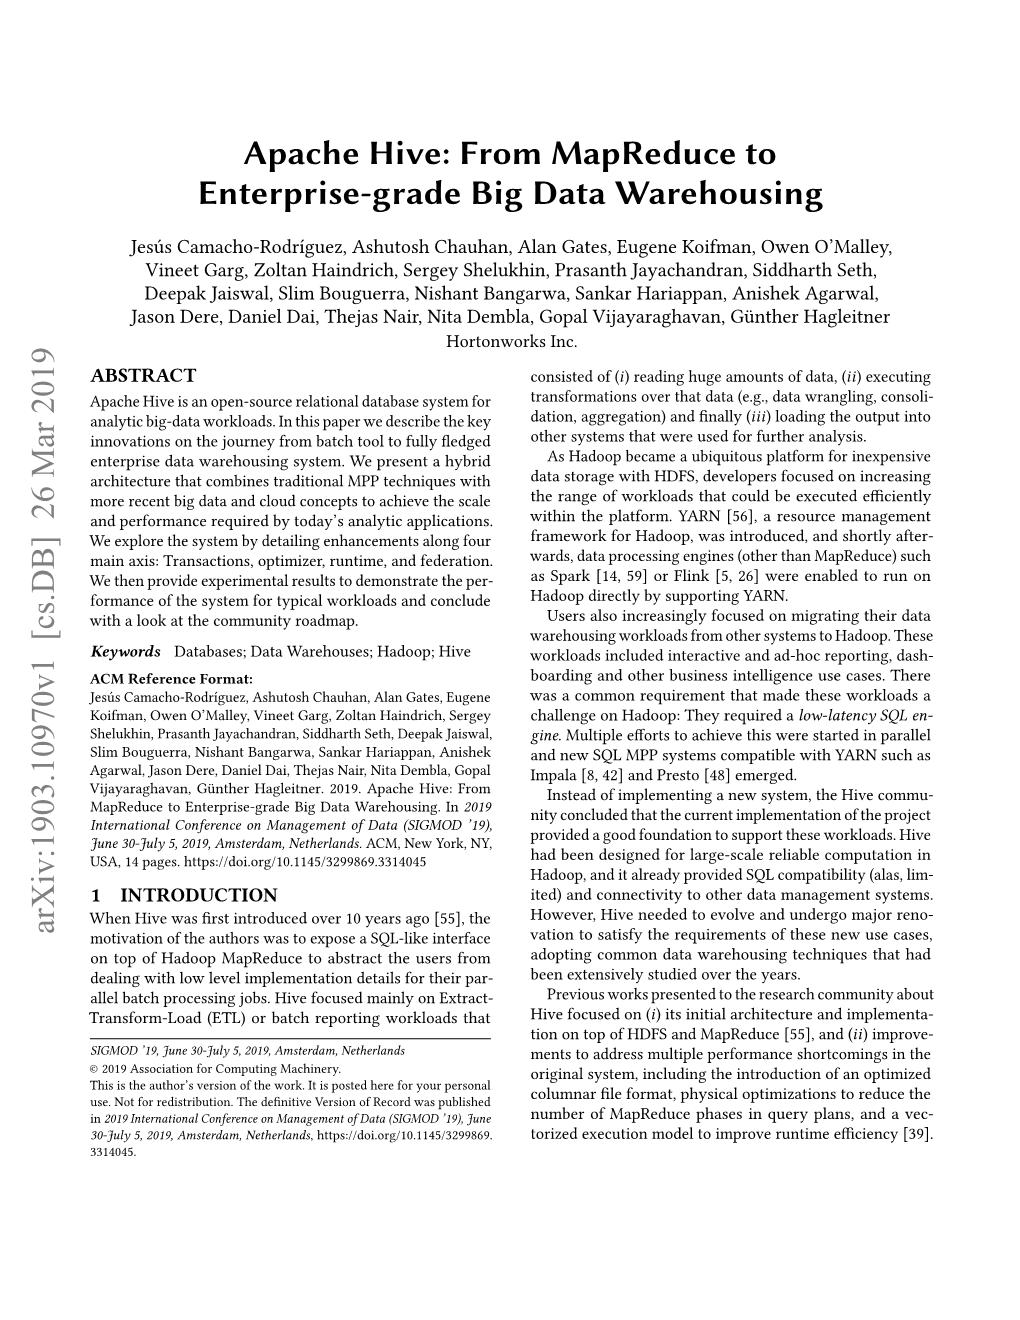 Apache Hive: from Mapreduce Toenterprise-Grade Big Data